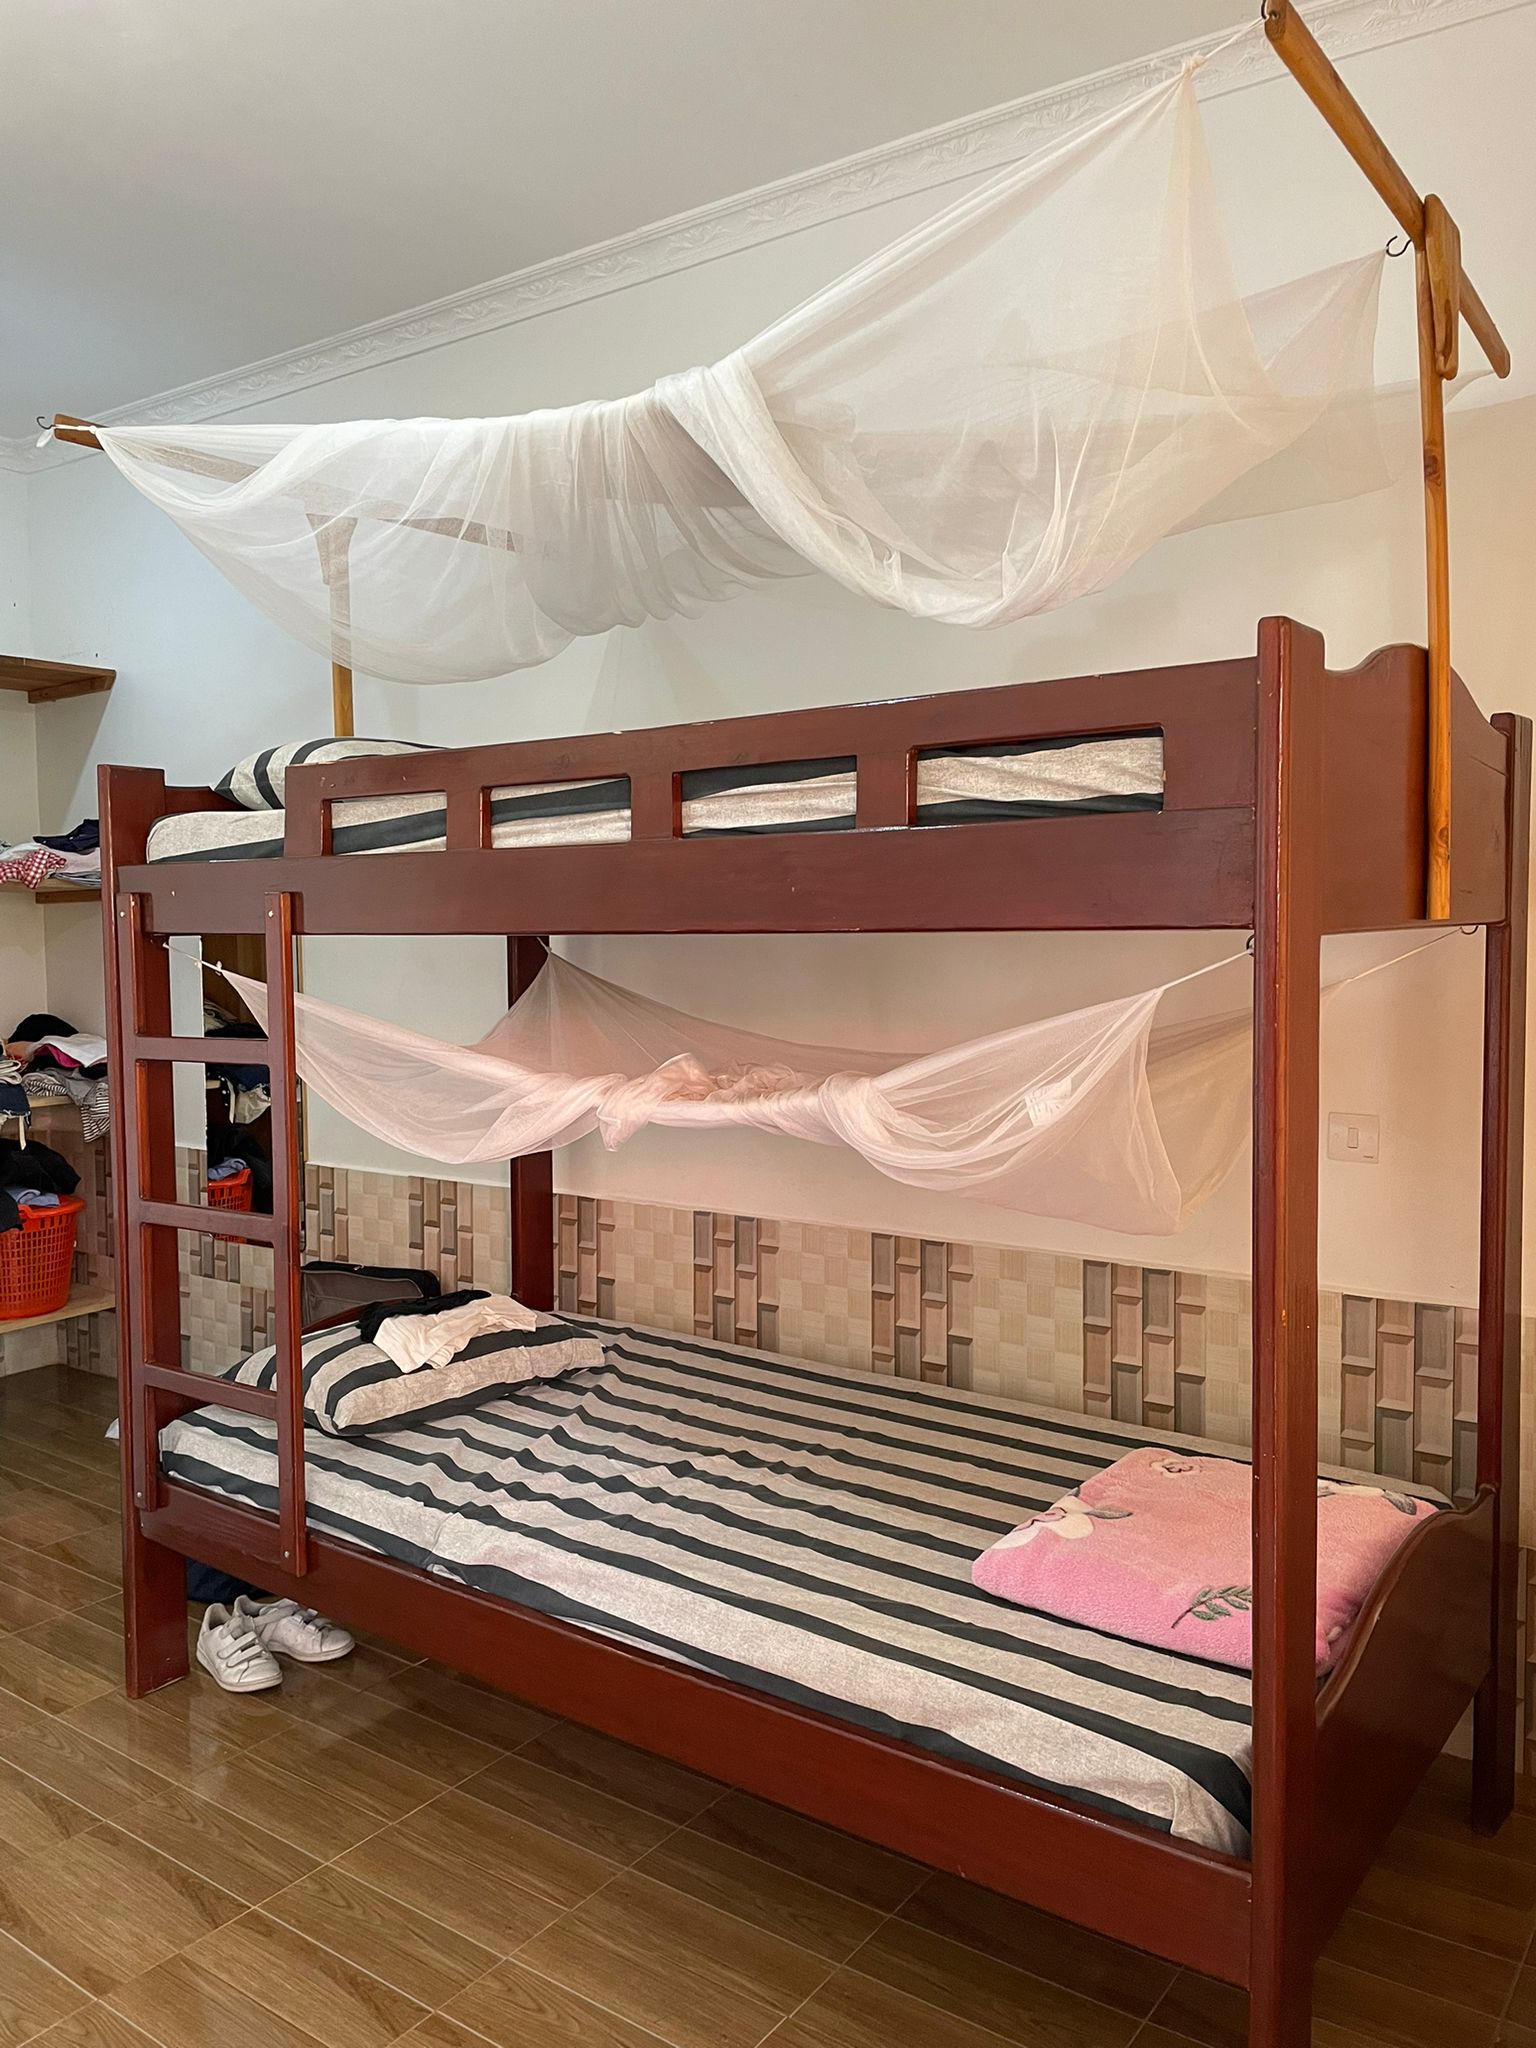 aifs-freiwilligenarbeit-tansania-child-and-youth-care-unterkunft-schlafzimmer-2